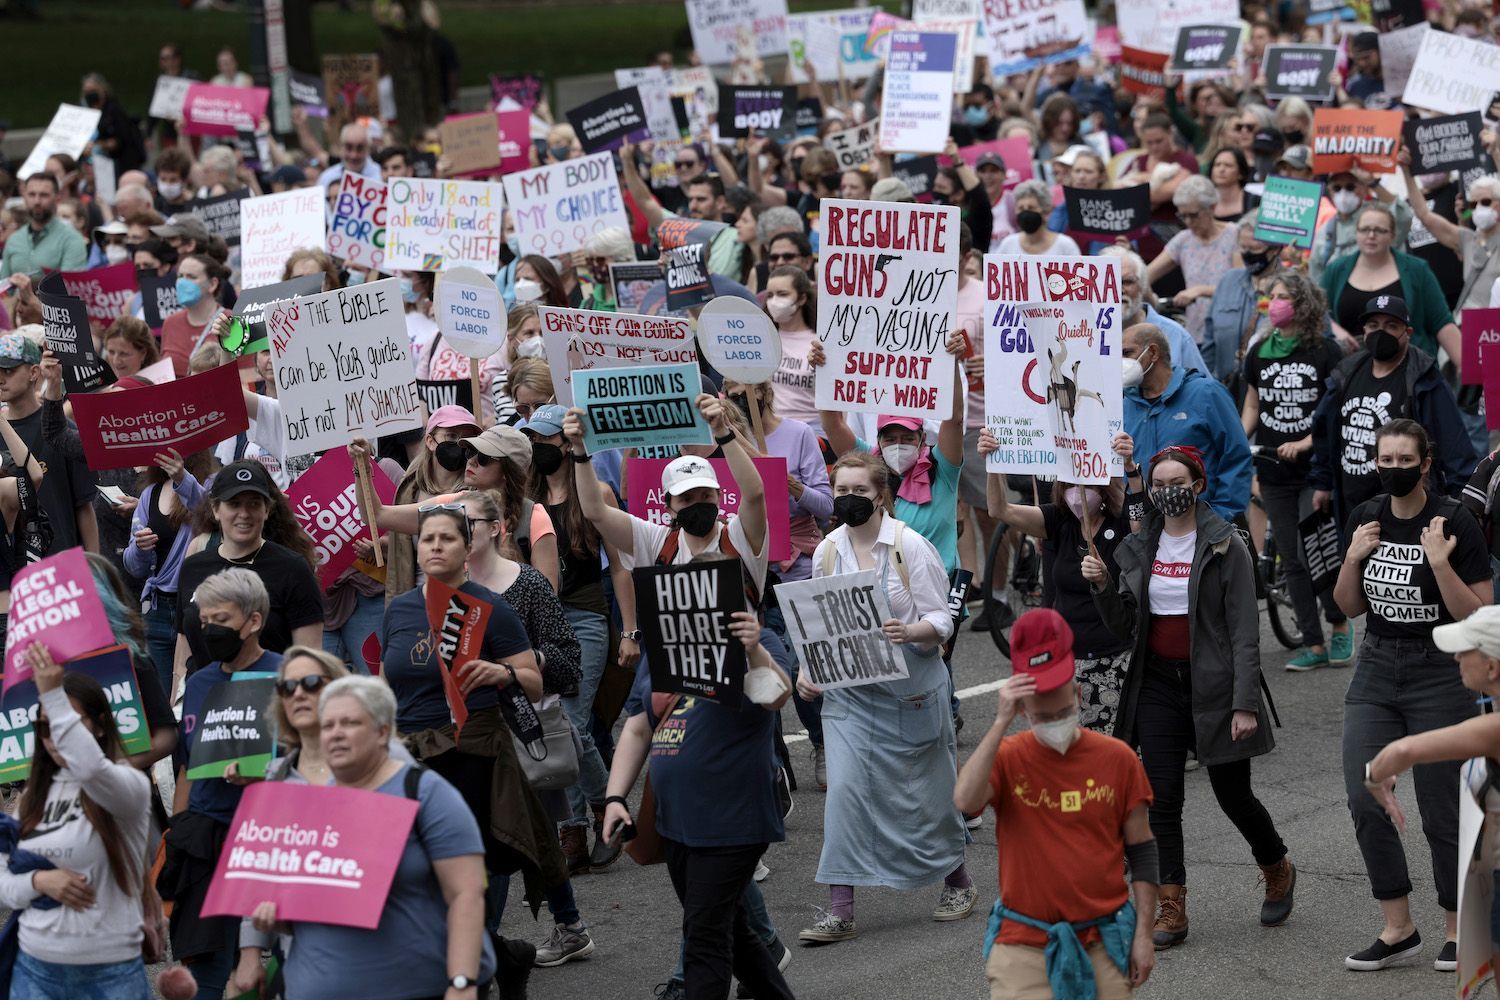 https://www.irishcentral.com/uploads/article-v2/2022/5/152484/Roe_Wade_Abortion-rights_demonstrators__May_14__2022_in_Washington__DC_via_Getty.jpg?t=1656111575